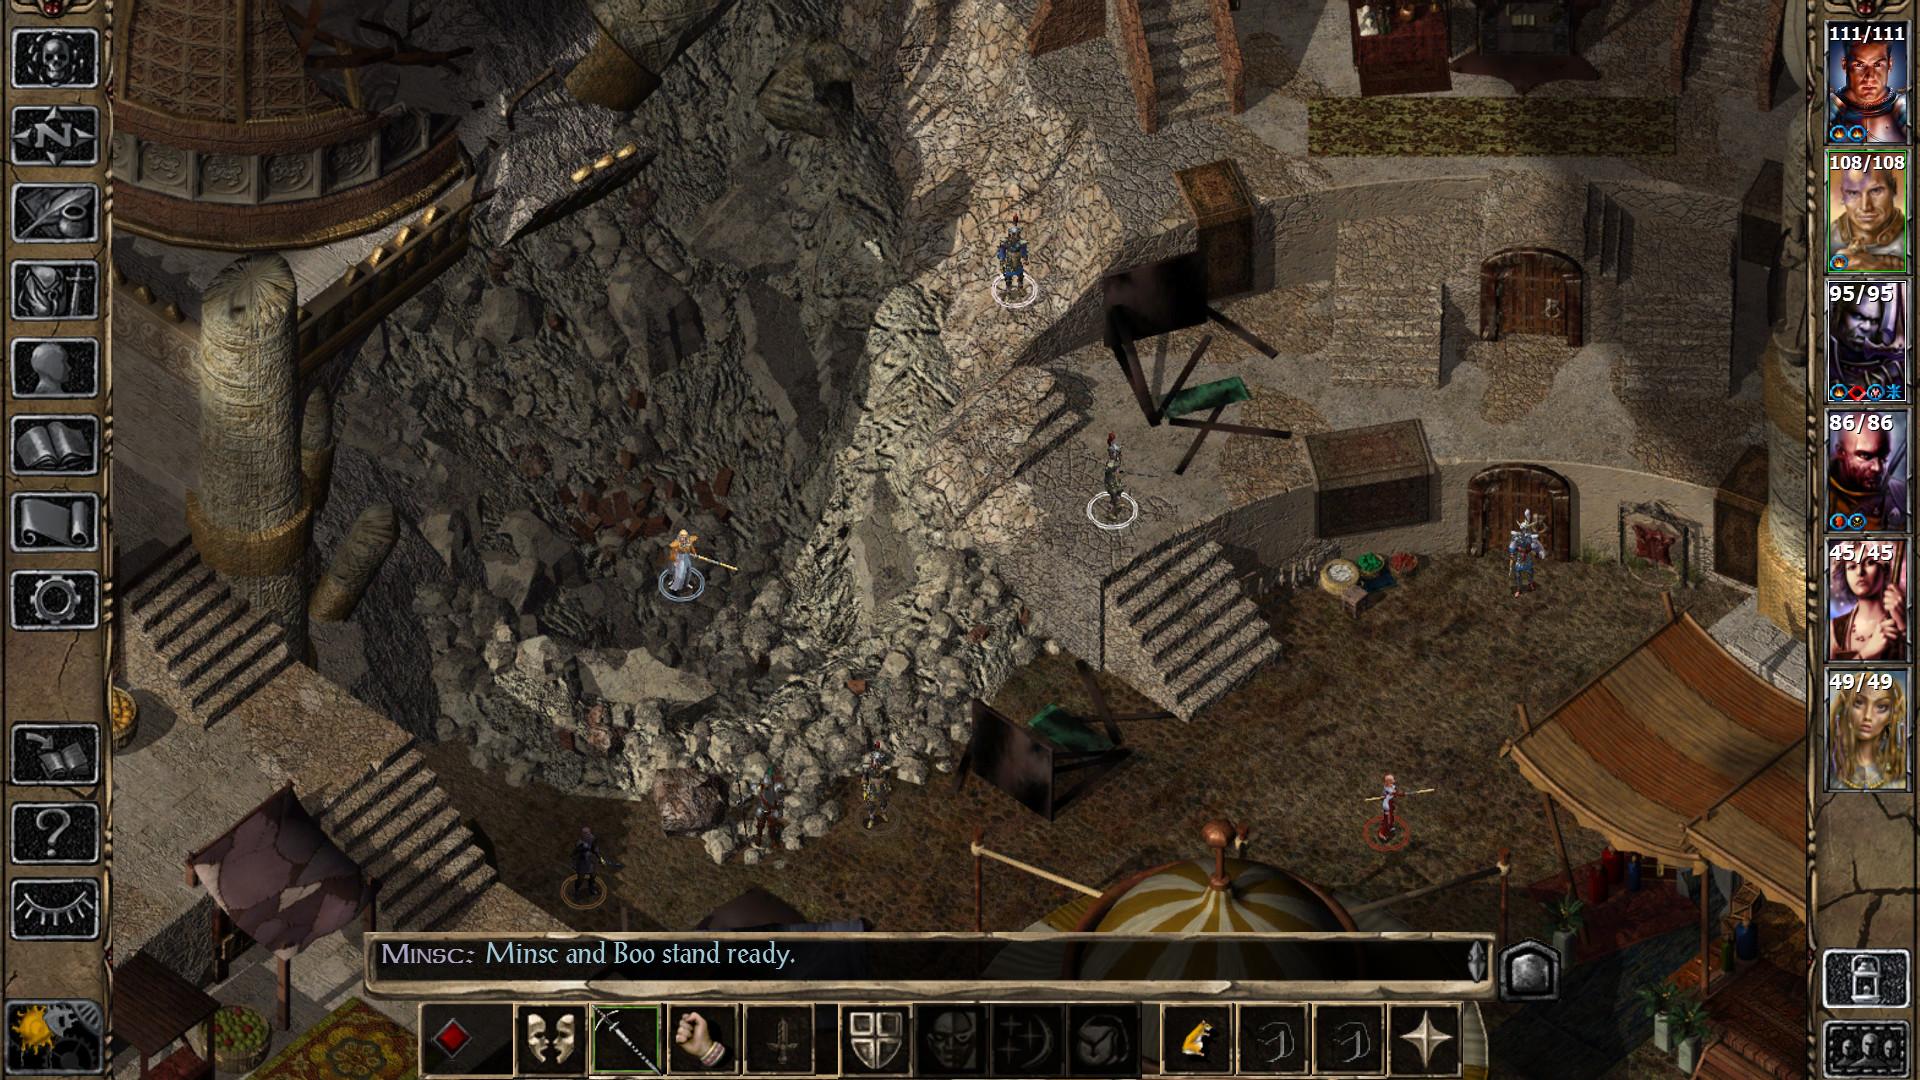 Screenshot №8 from game Baldur's Gate II: Enhanced Edition